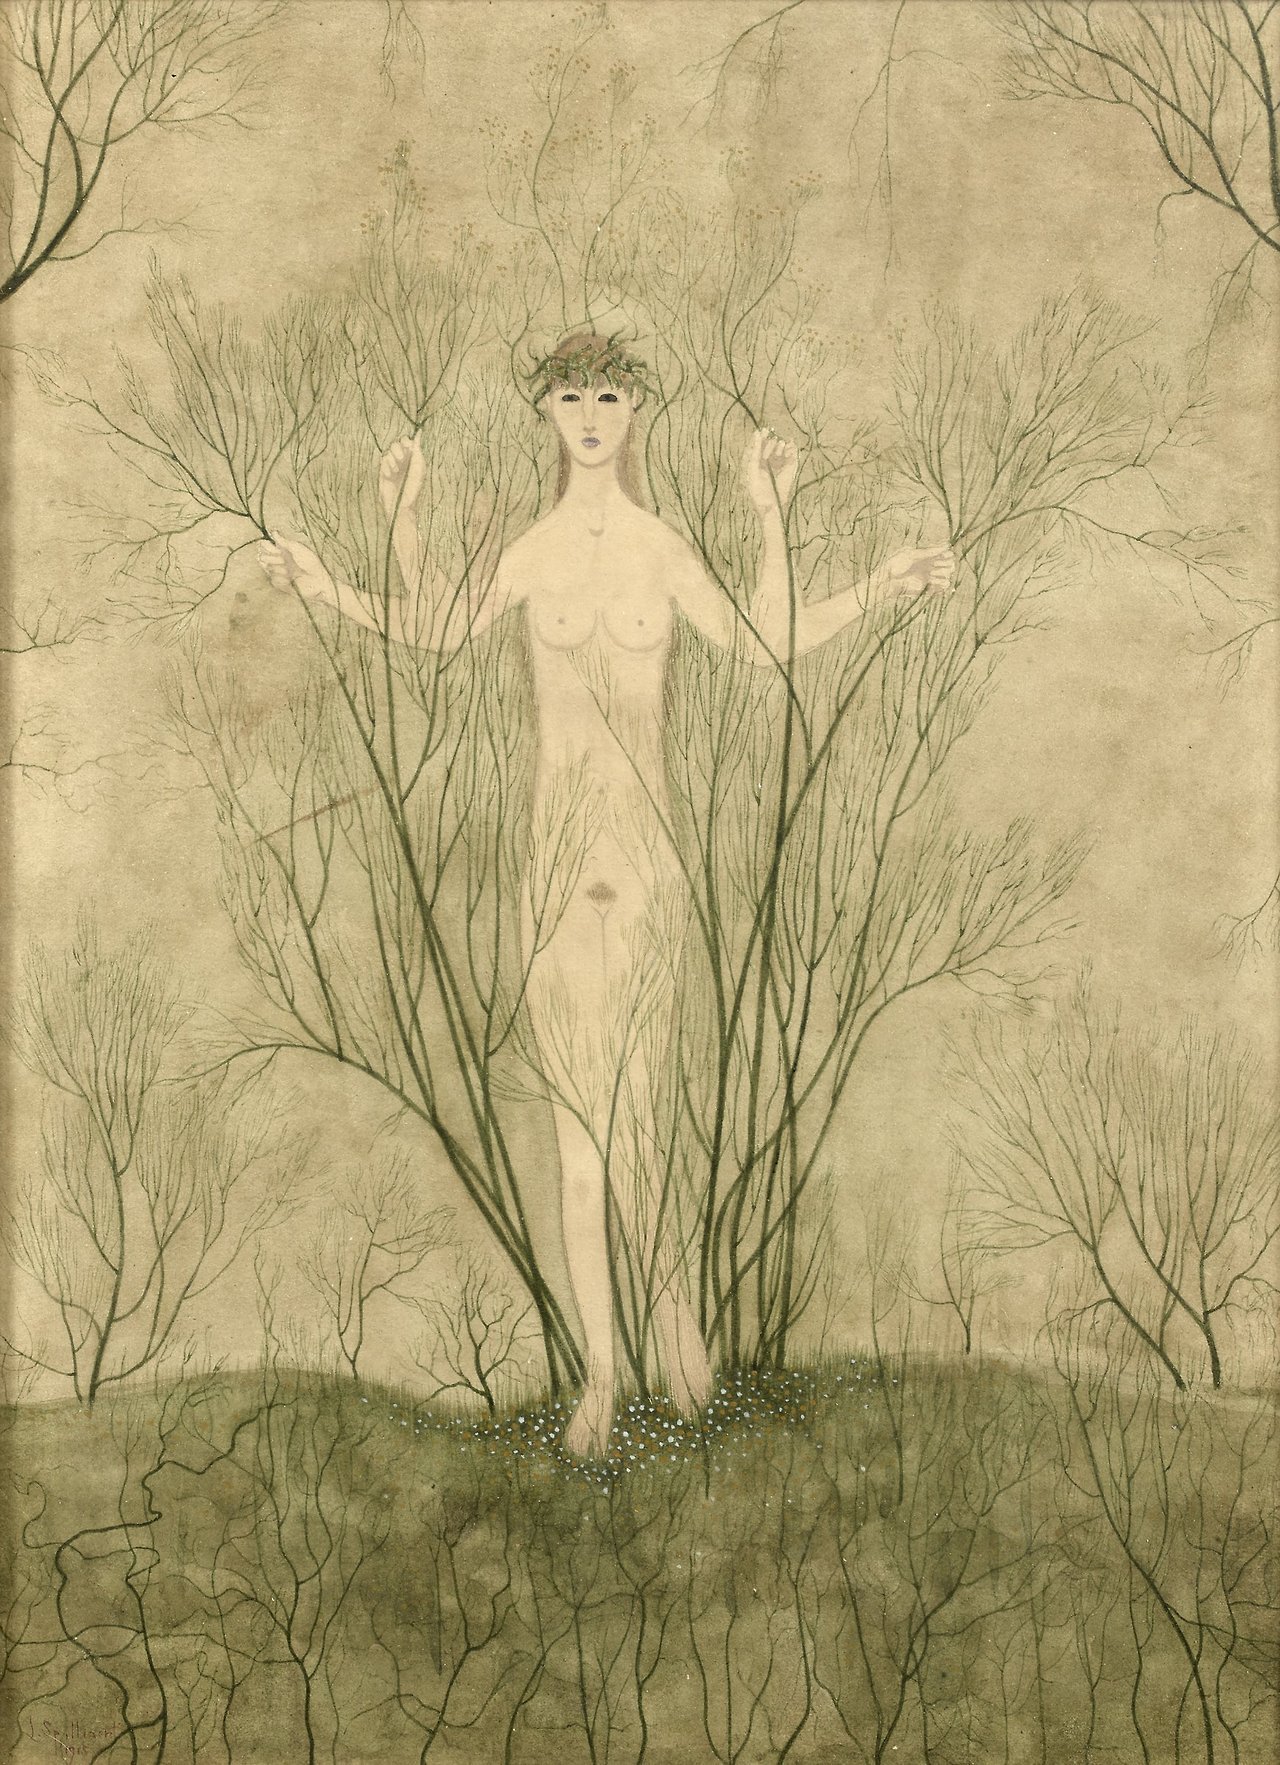 thunderstruck9:Léon Spilliaert (Belgian, 1881-1946), Eve aux quatre bras [Eve with